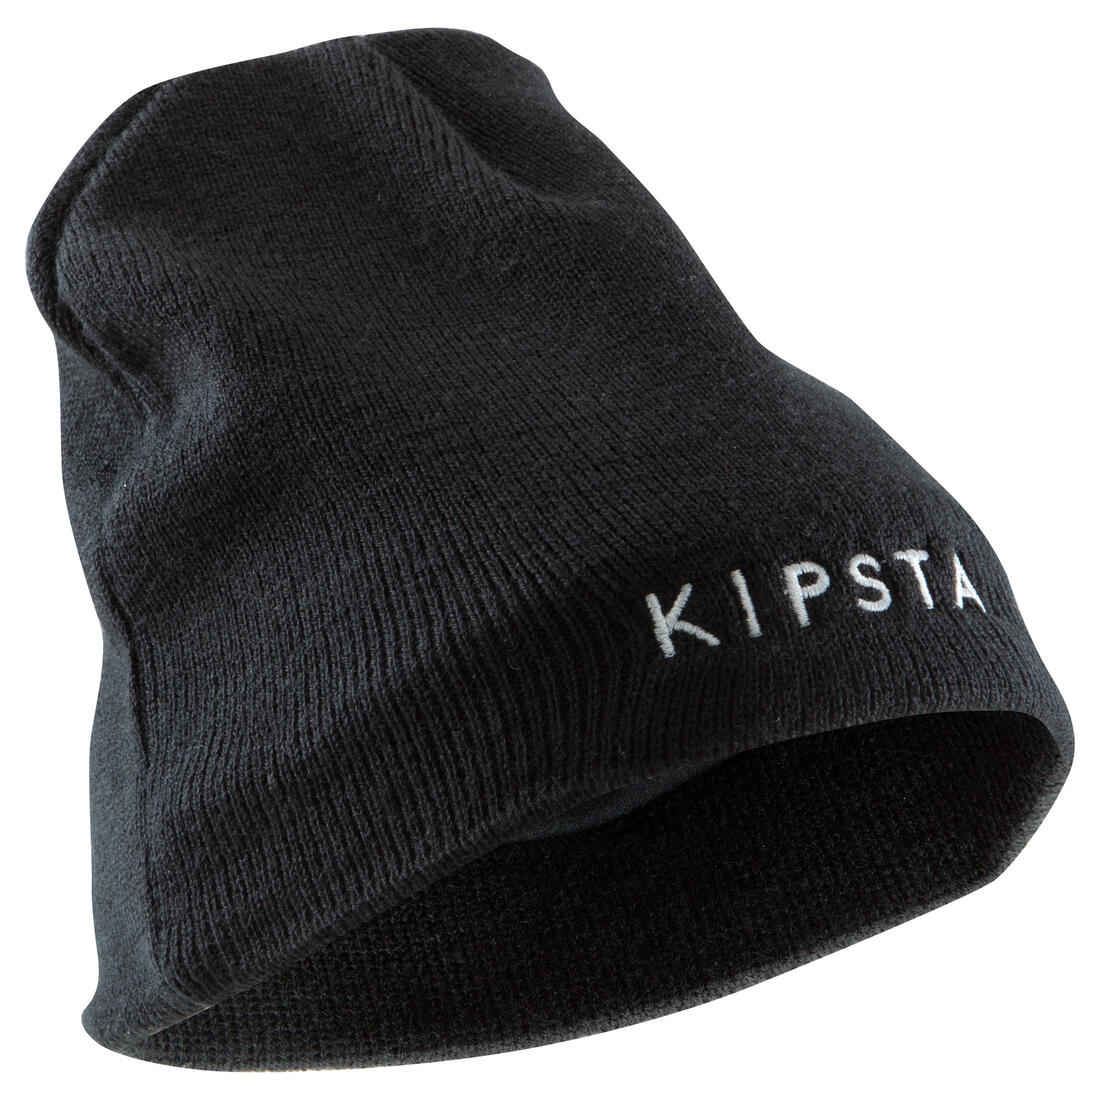 KIPSTA(キプスタ) サッカー ハット Keepwarm キッズ